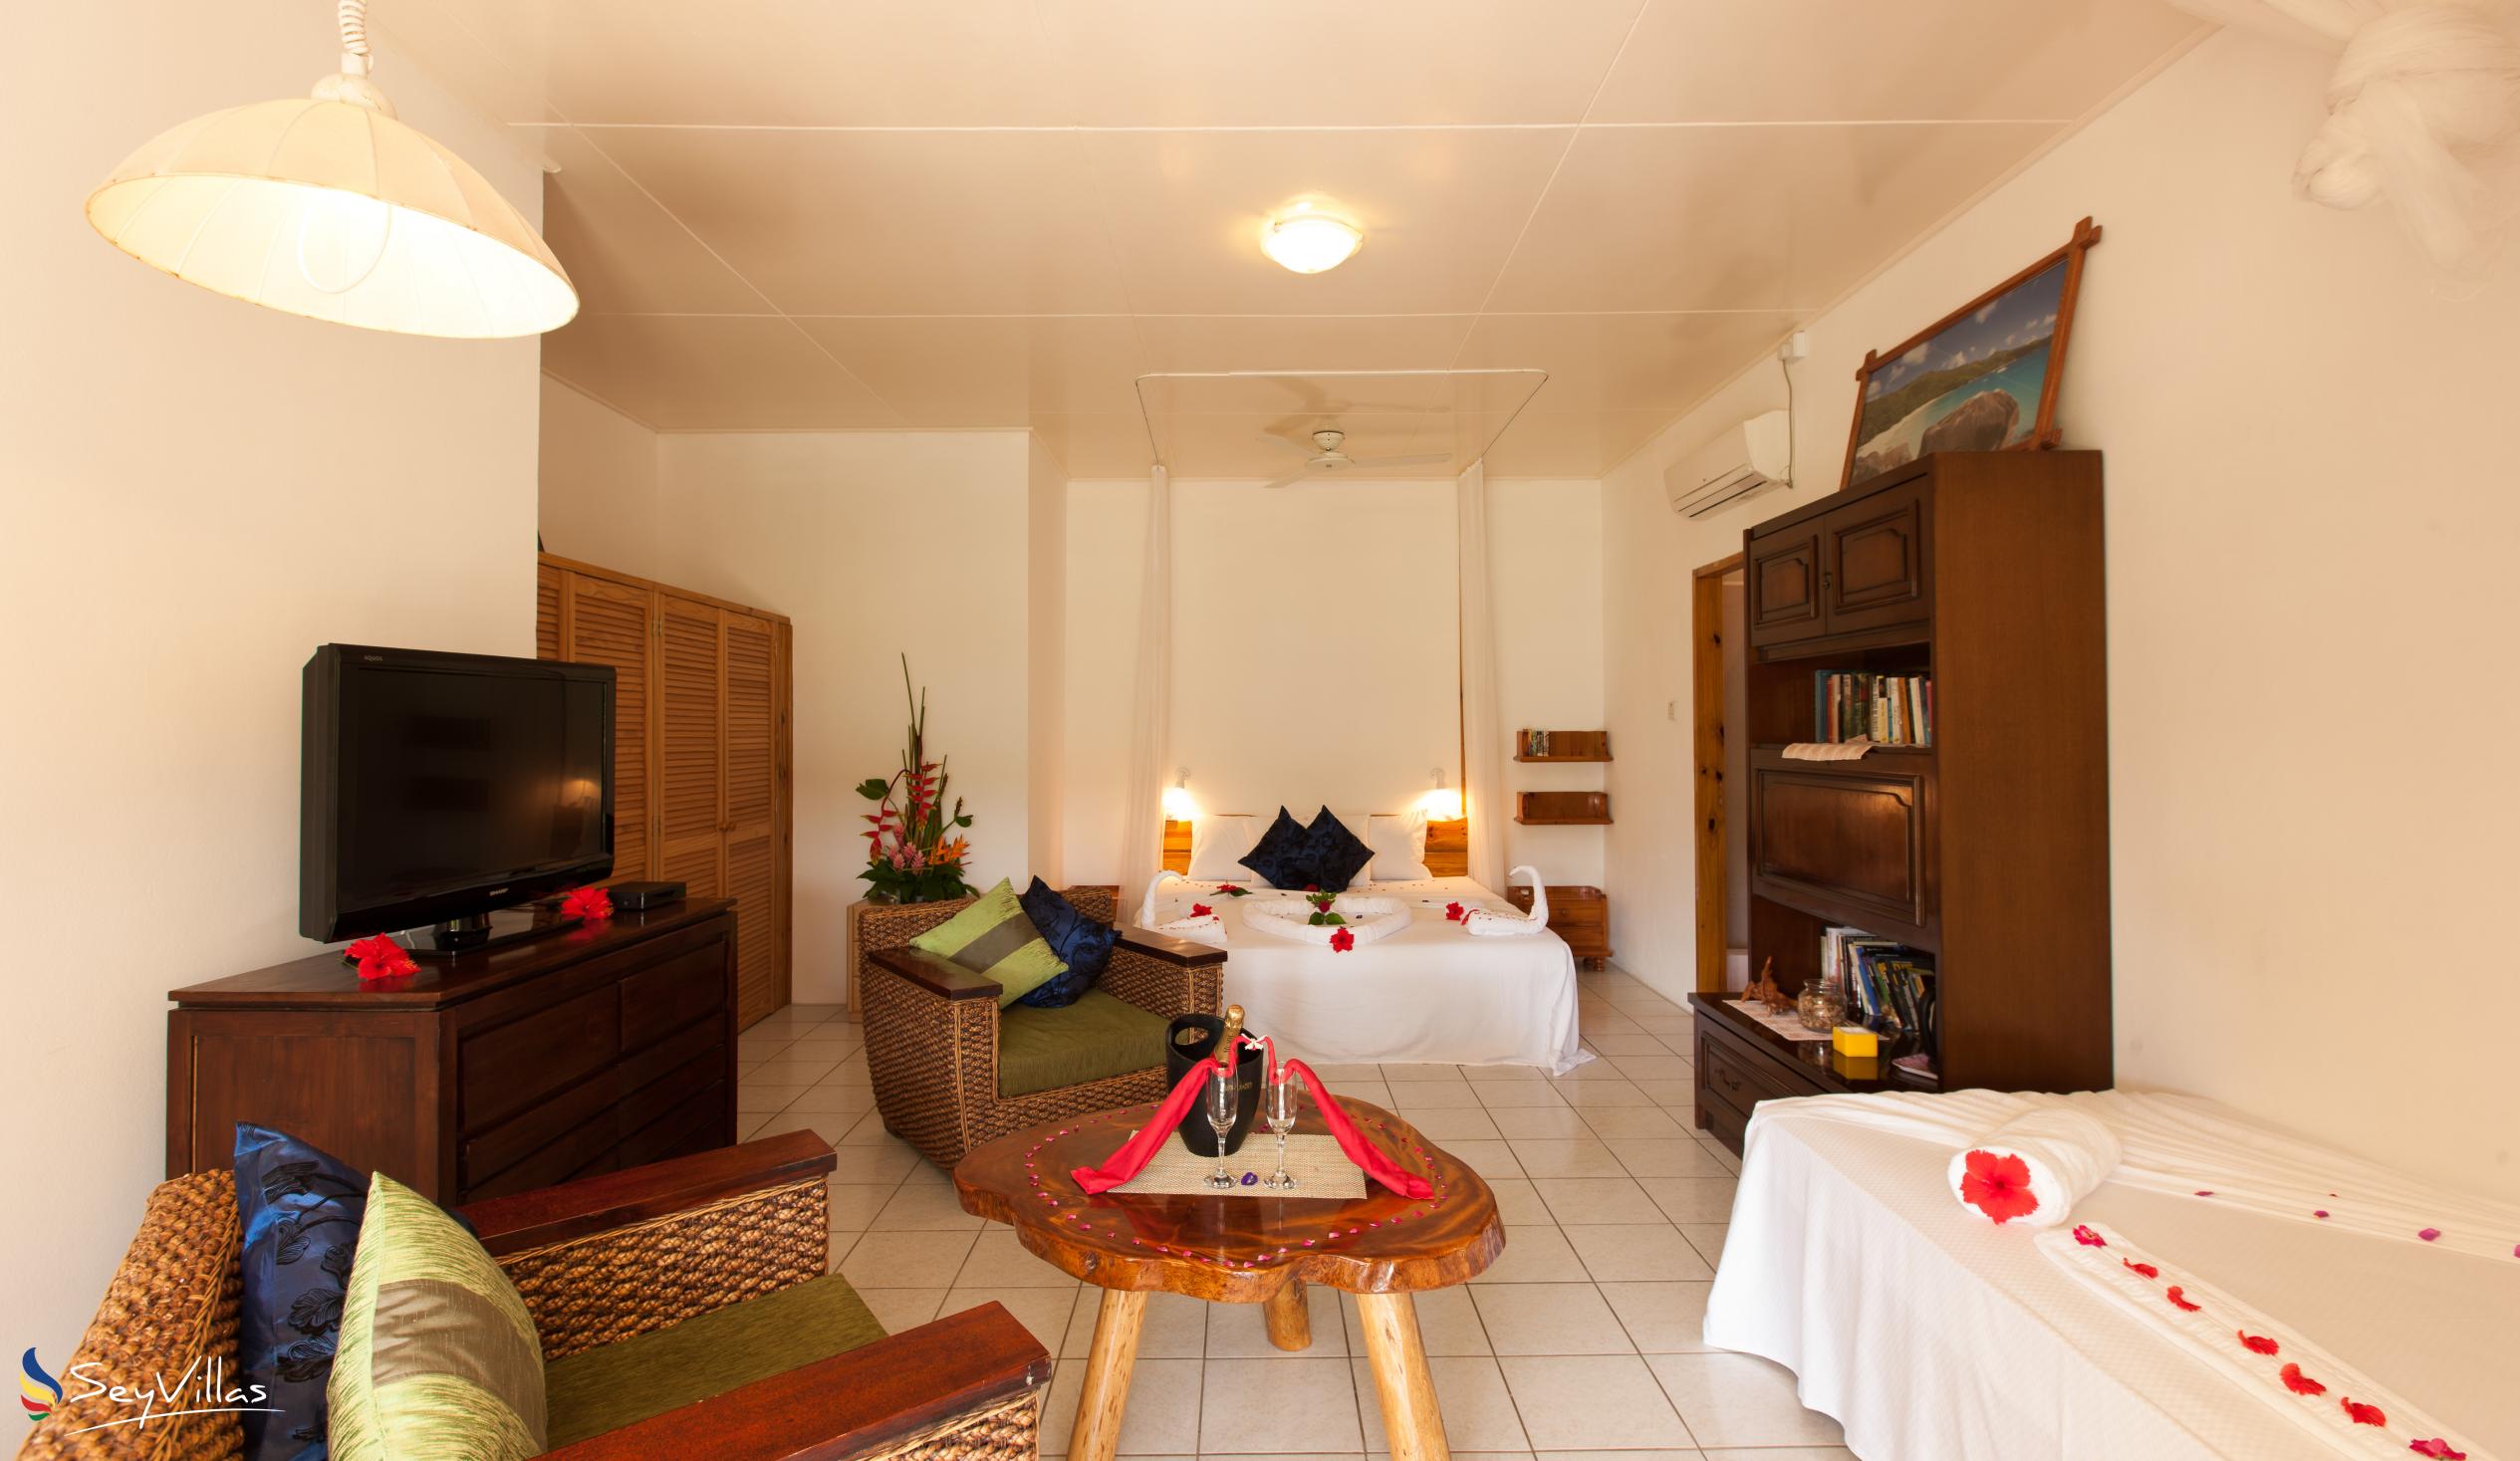 Photo 26: Le Relax St. Joseph Guest House - Superior Room - Praslin (Seychelles)